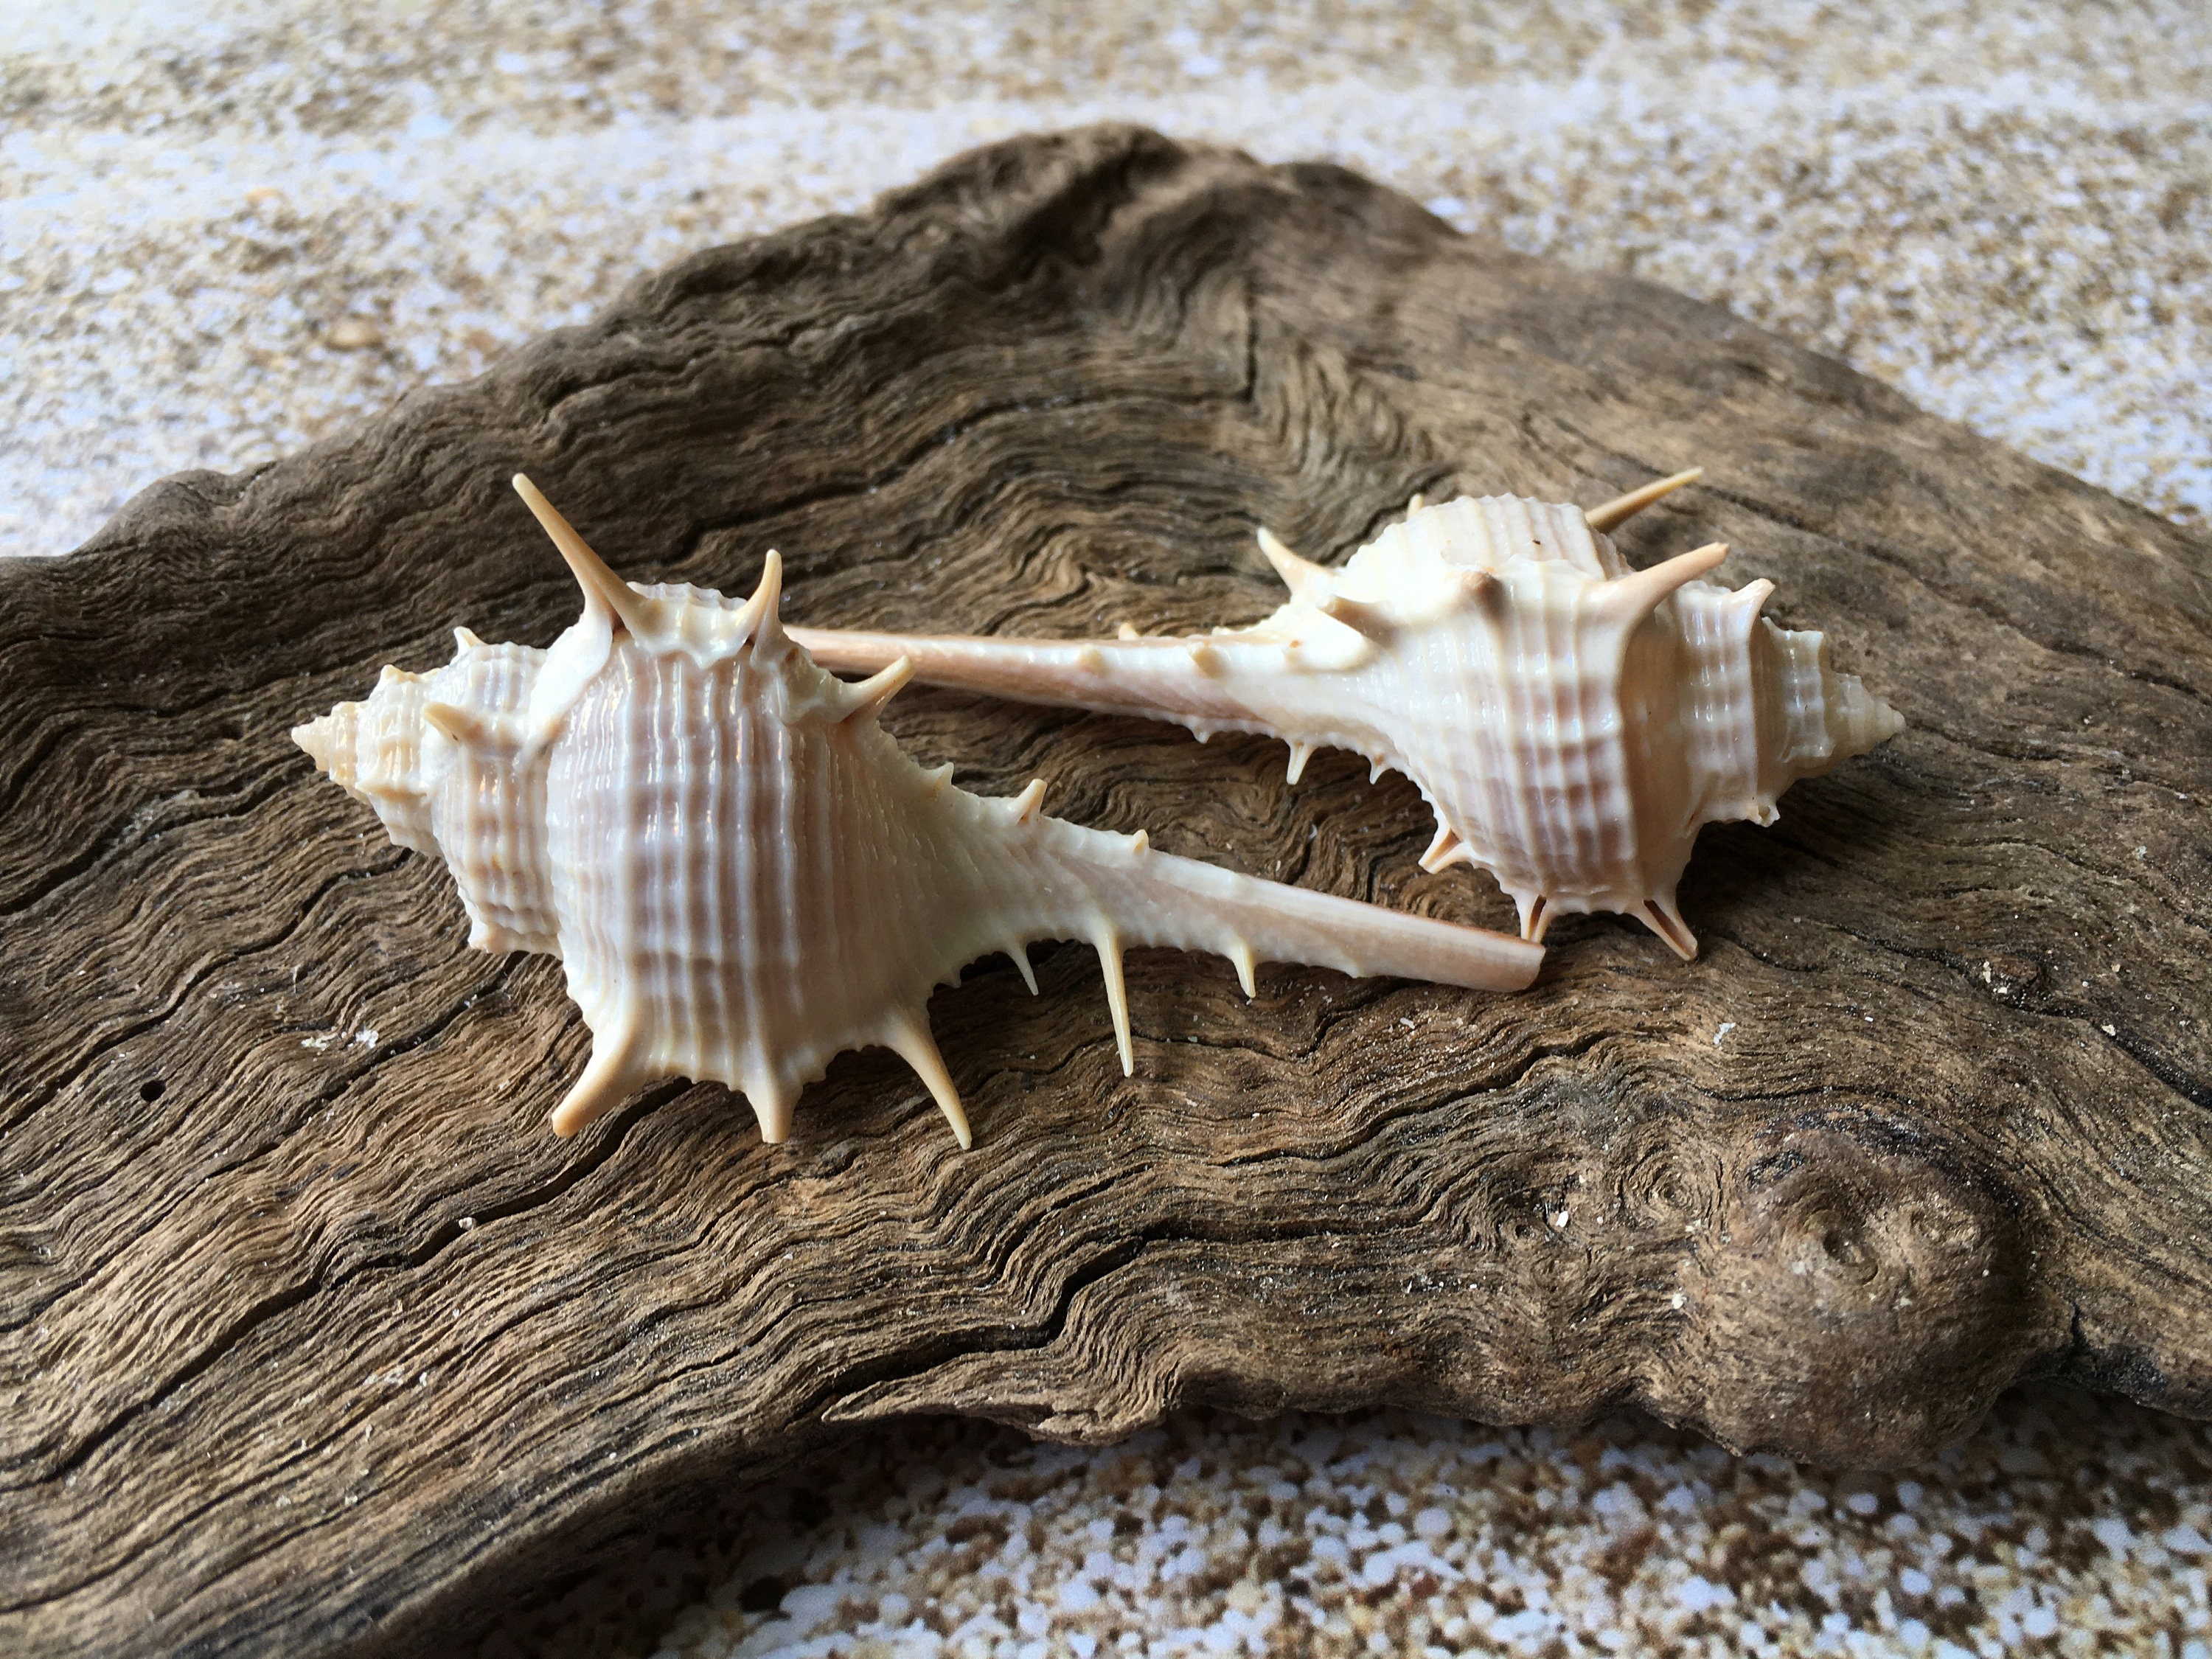 Capiz Shells Round 2 - Flat shells - Natural Cream Capiz - Beach Wedding  Favors - Crafts Supplies Crafting - Home Decor!